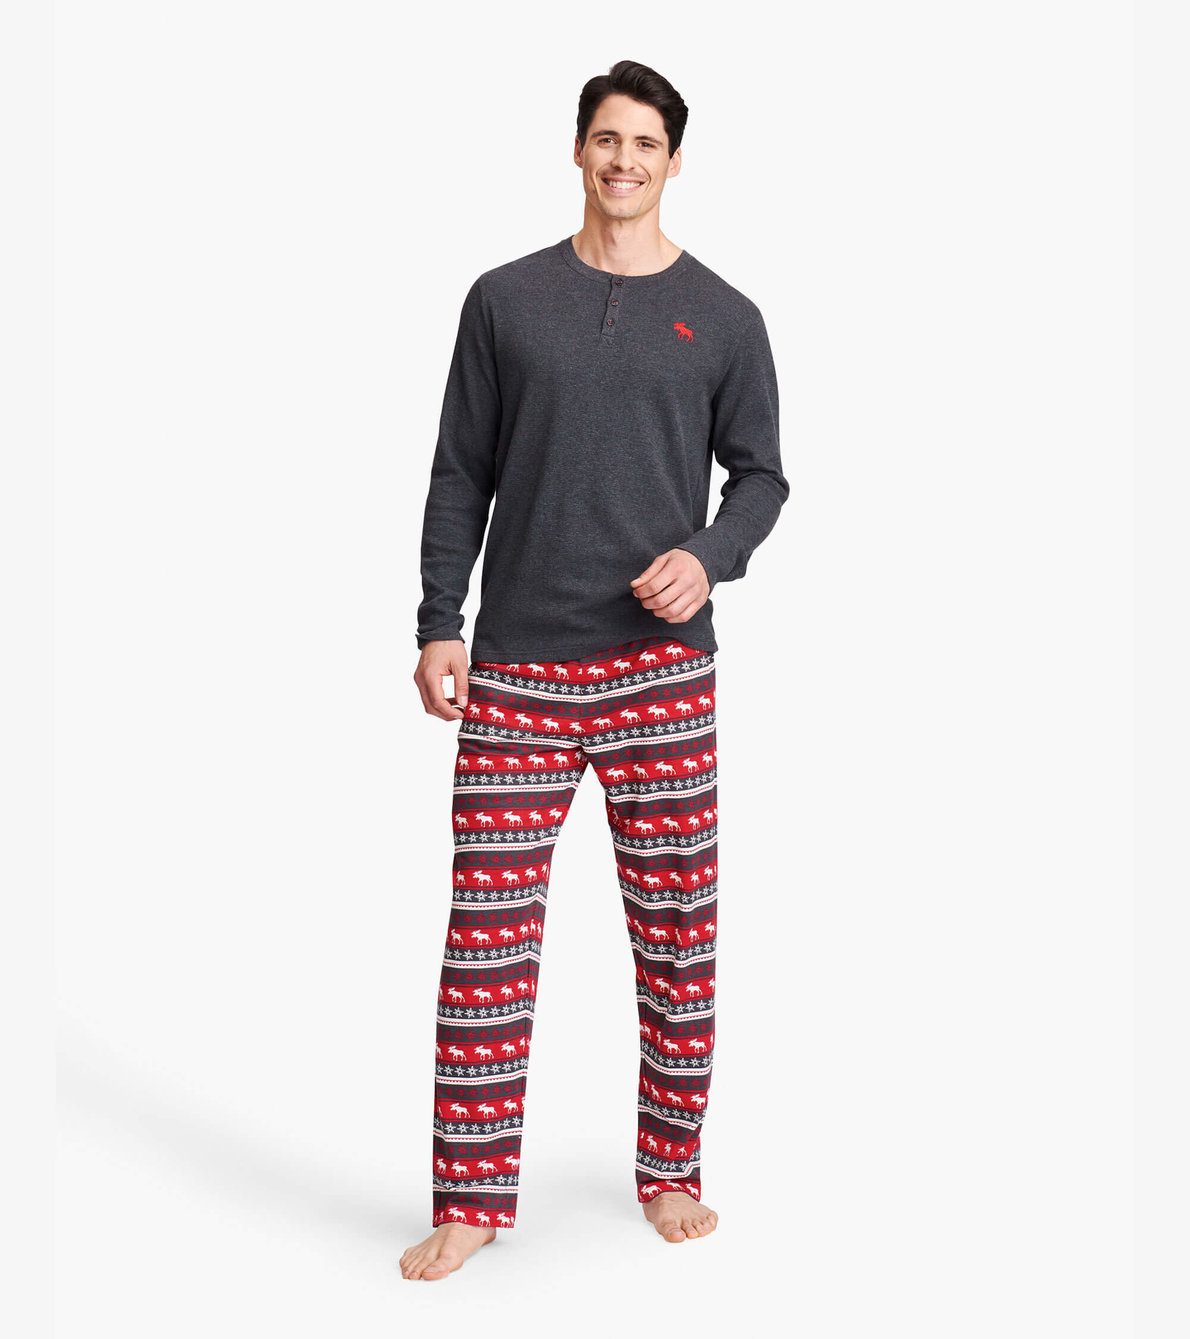 View larger image of Fair Isle Men's Tee and Pants Pajama Separates